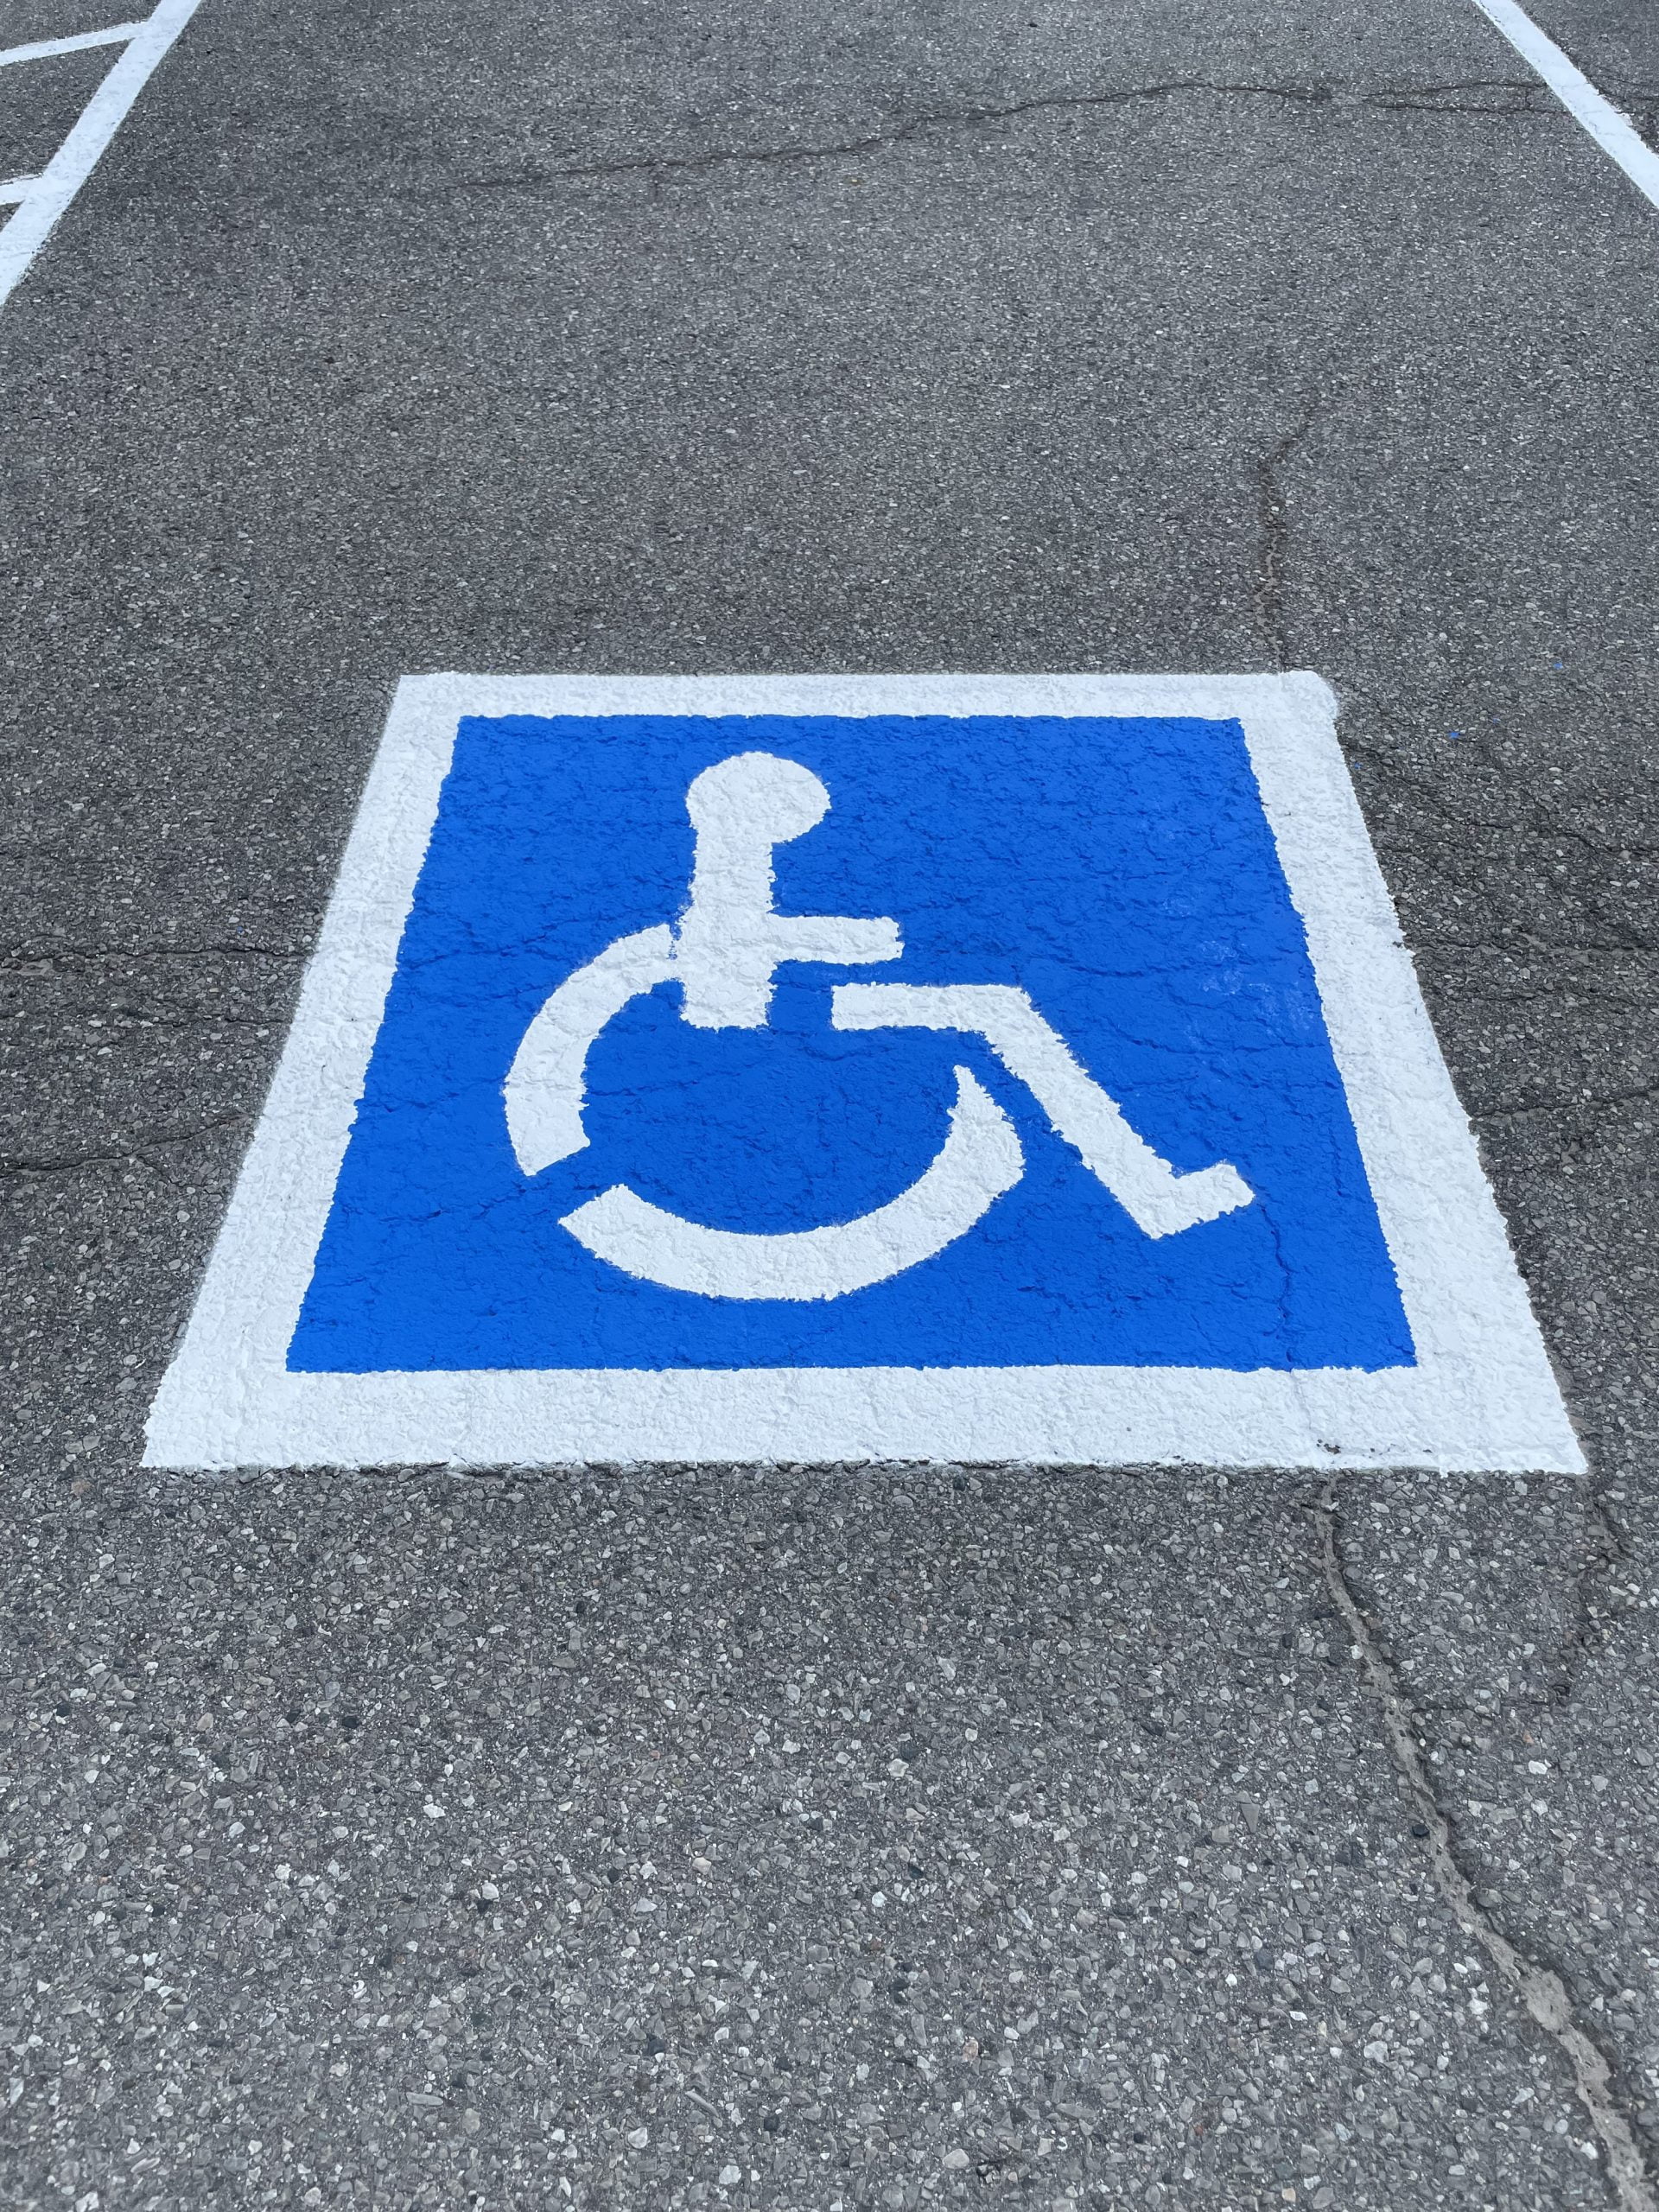 Handicap Parking - After